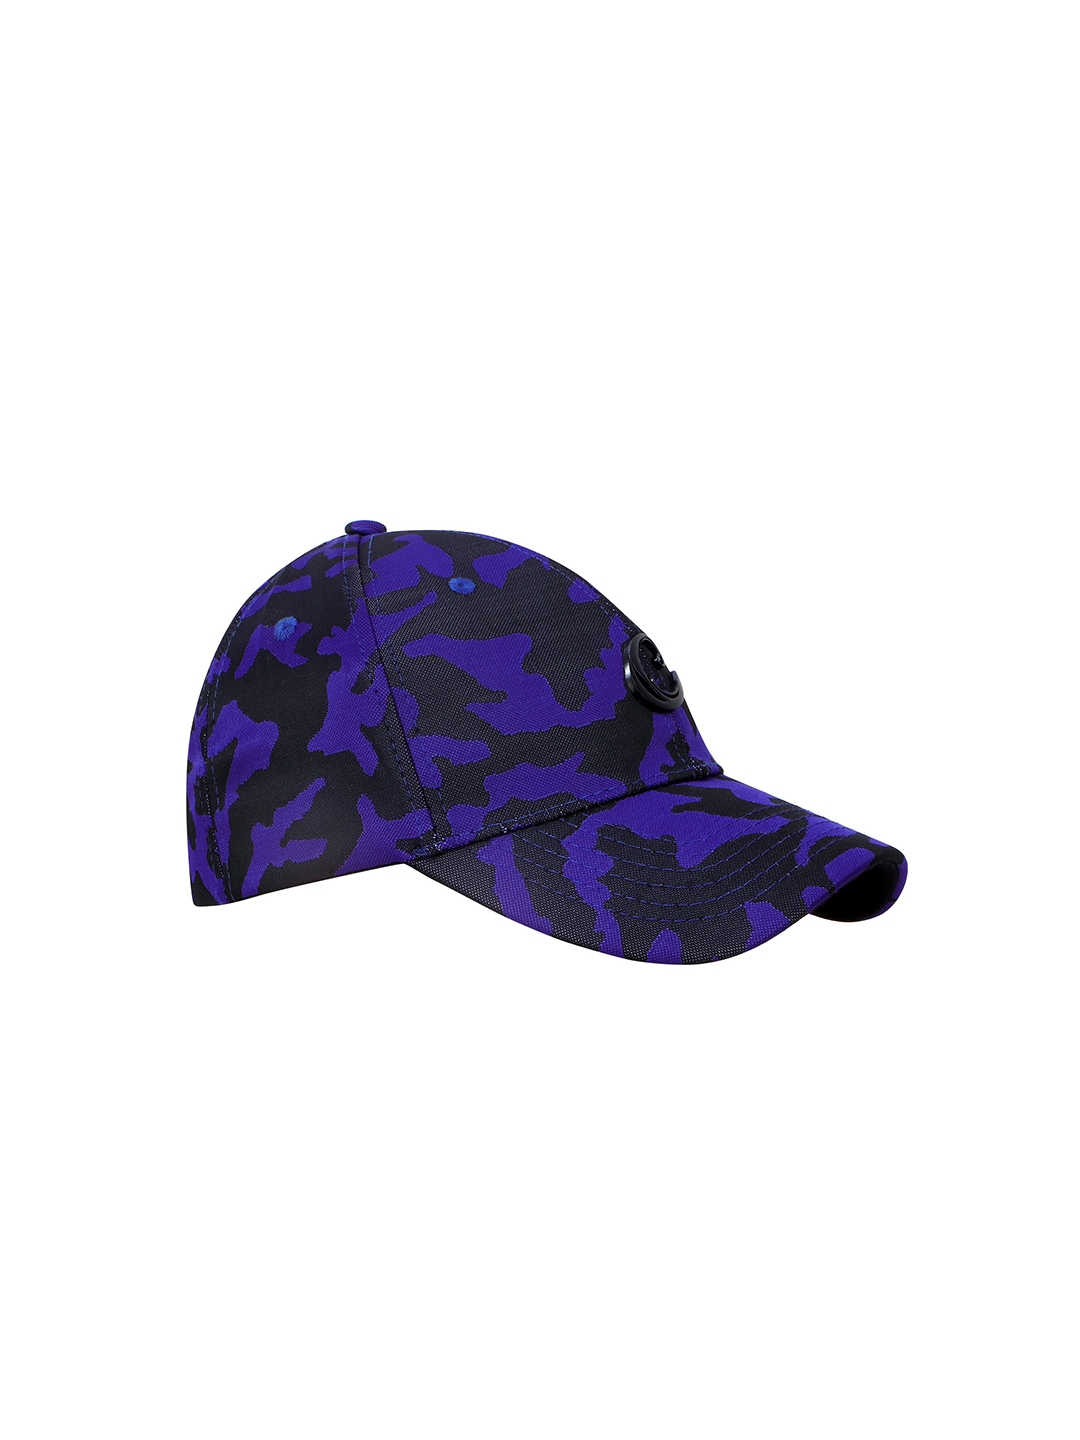 TyranT Unisex Blue Camouflage Print Baseball Cap